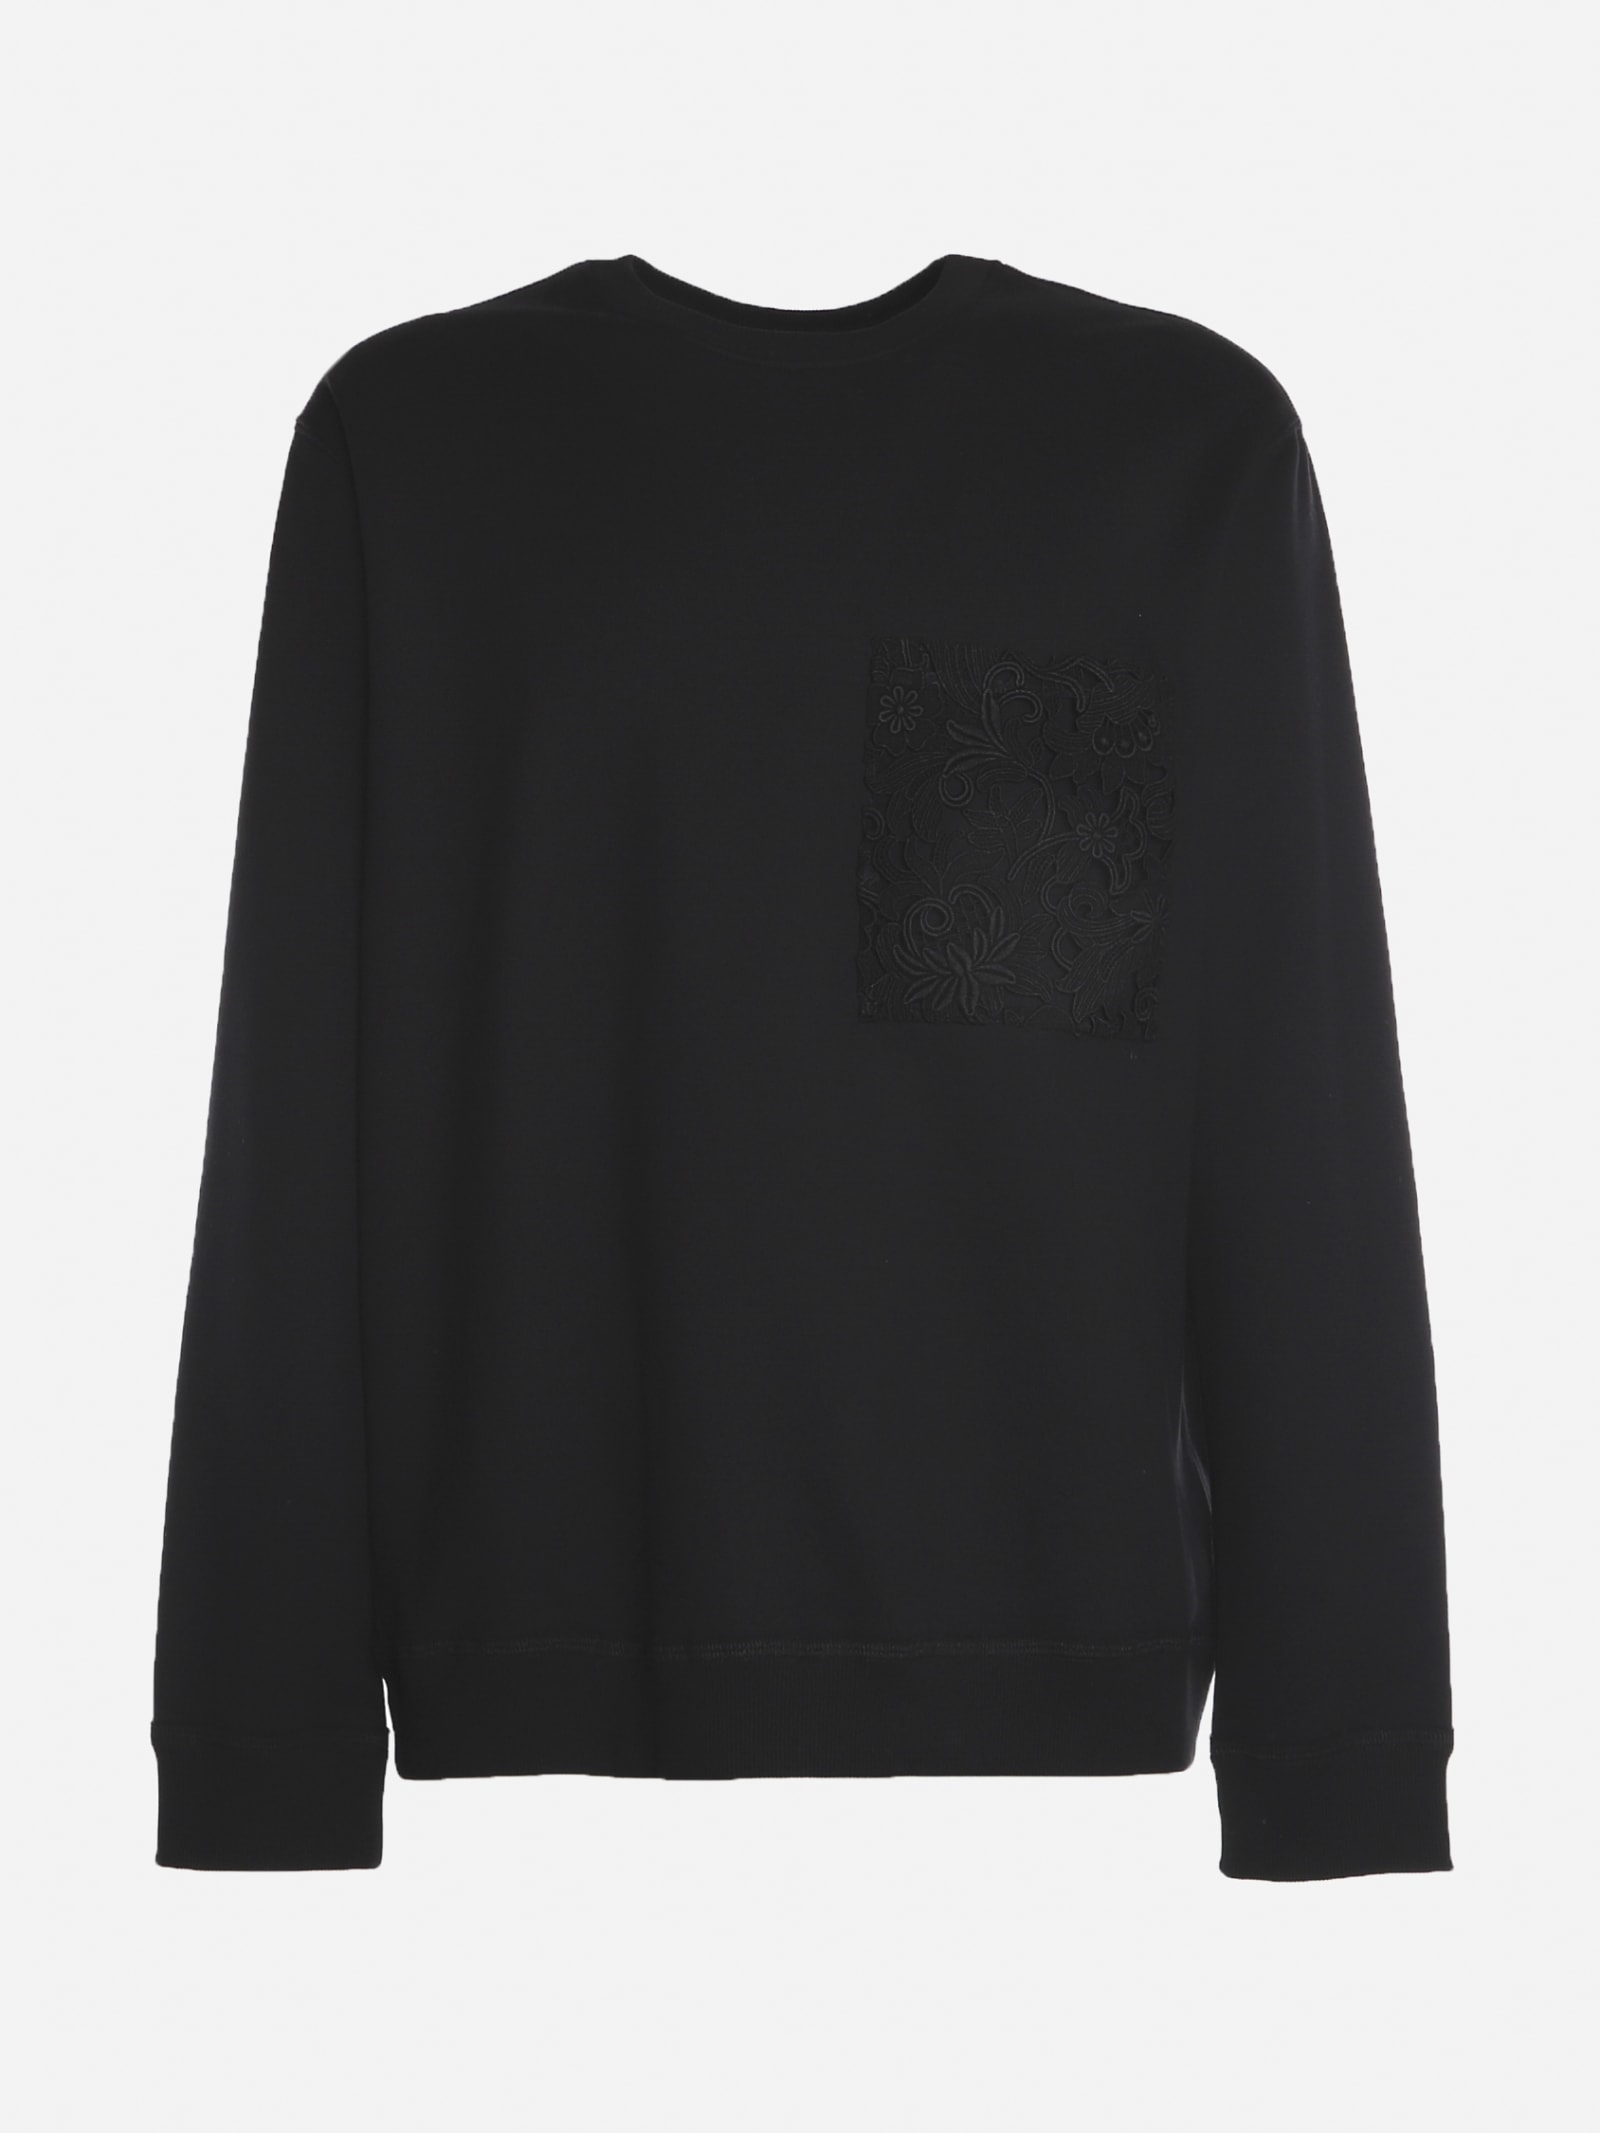 Valentino Cotton Sweatshirt With Macramé Lace Insert